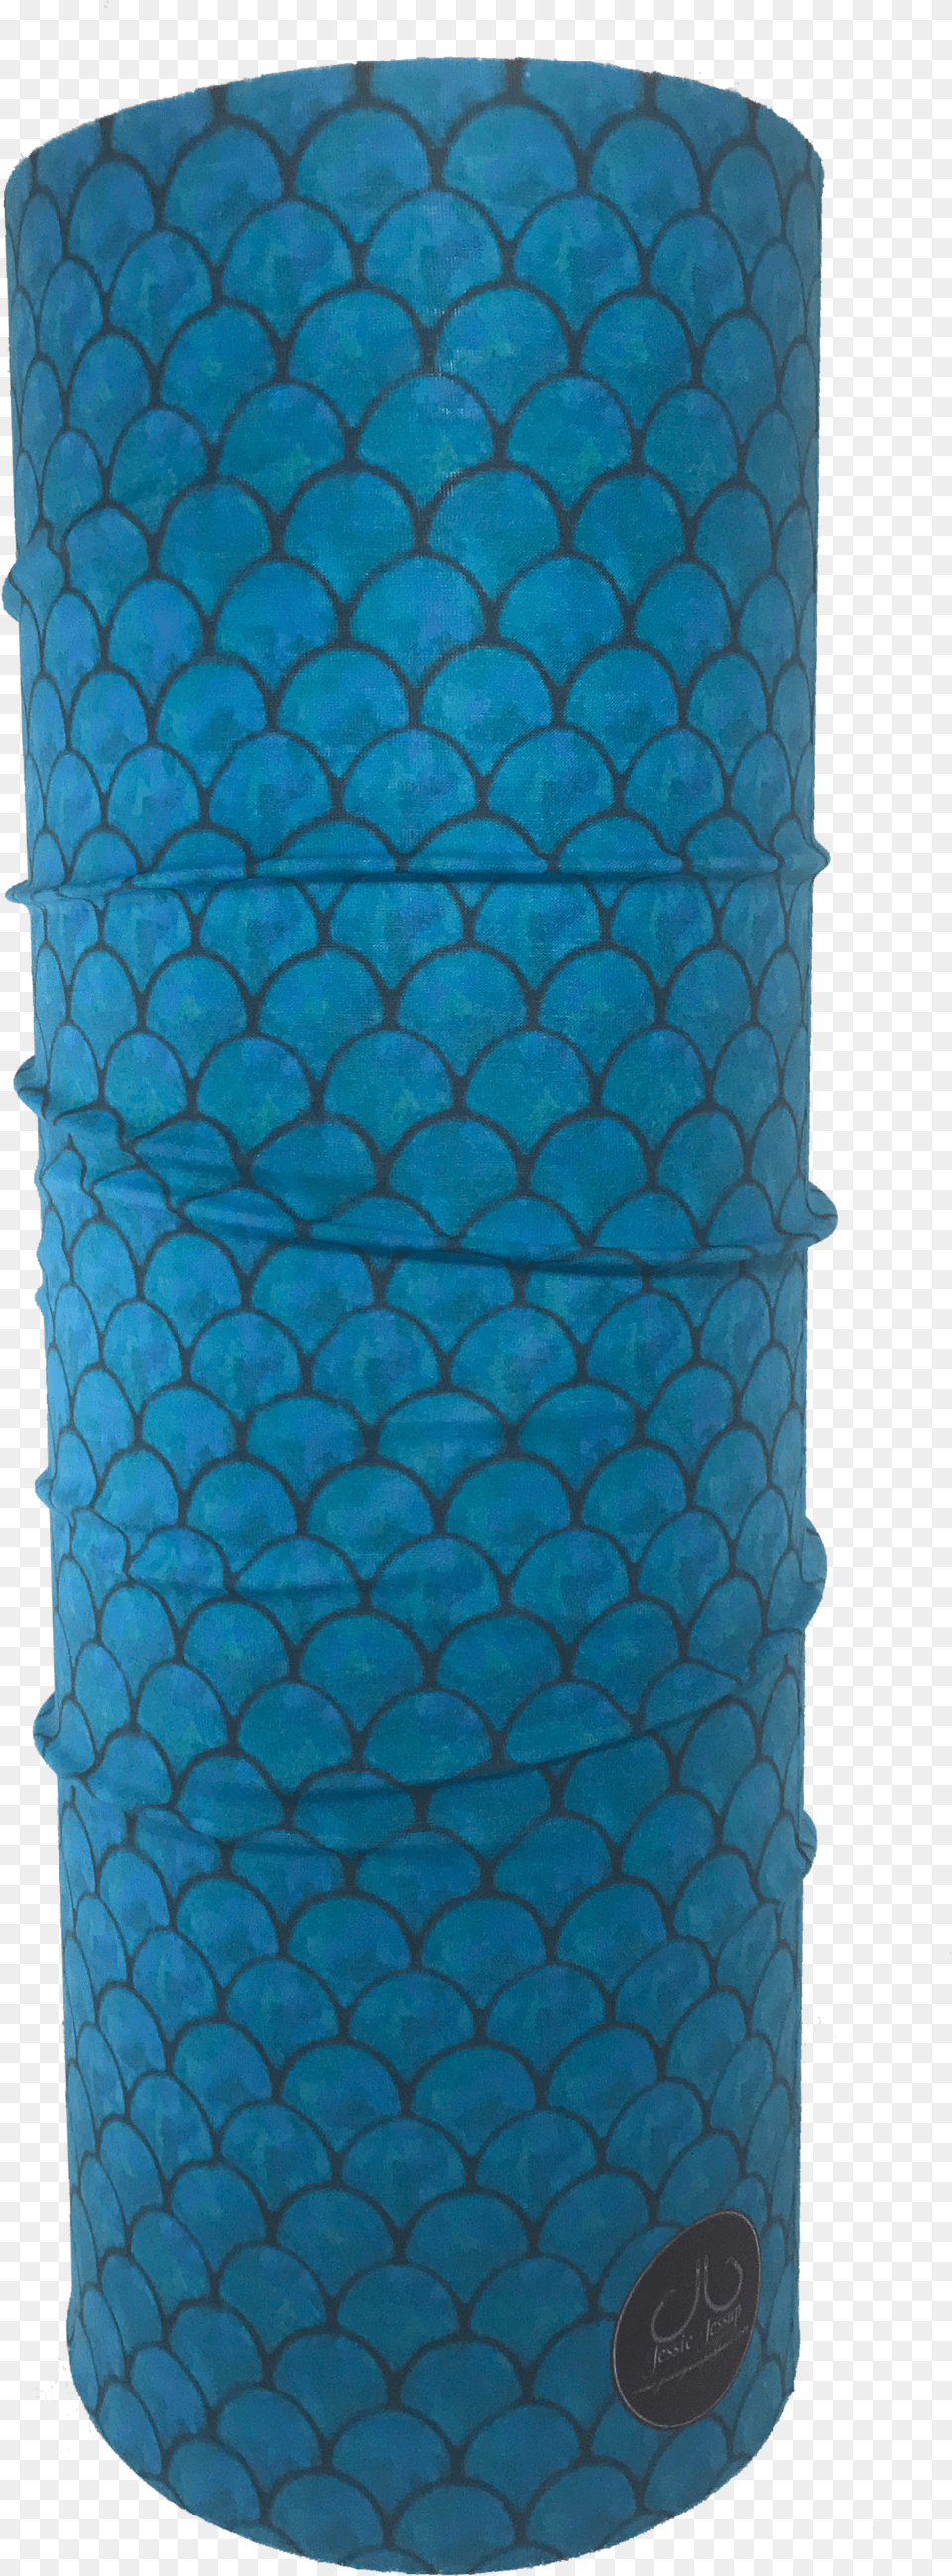 Transparent Mermaid Scales Vase Png Image